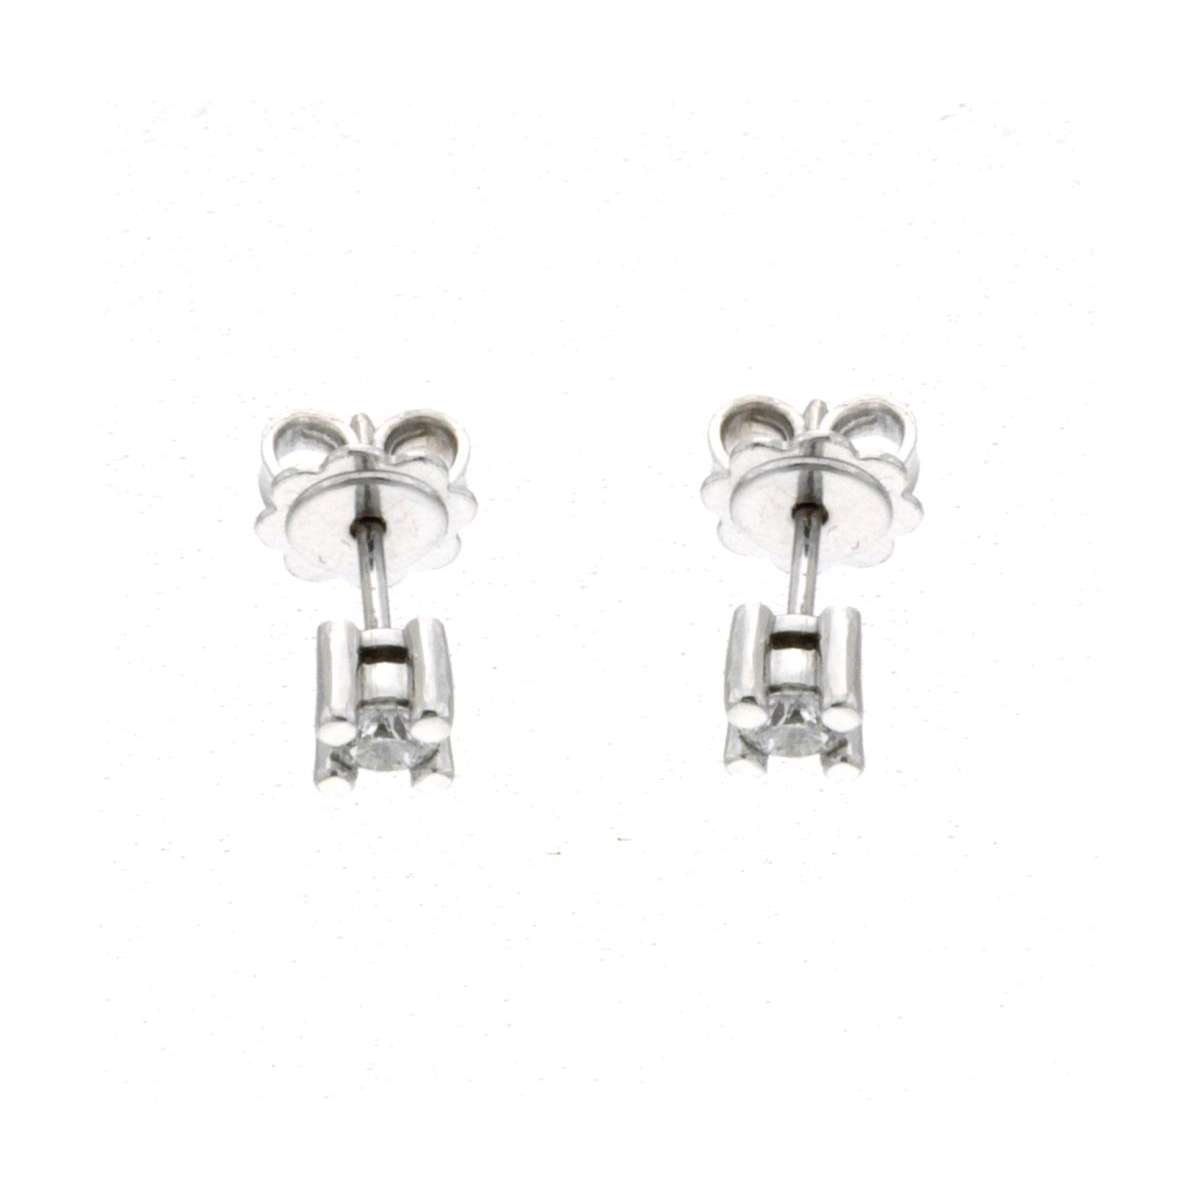 Solitaire earrings 0.30 carats diamonds E-VS1